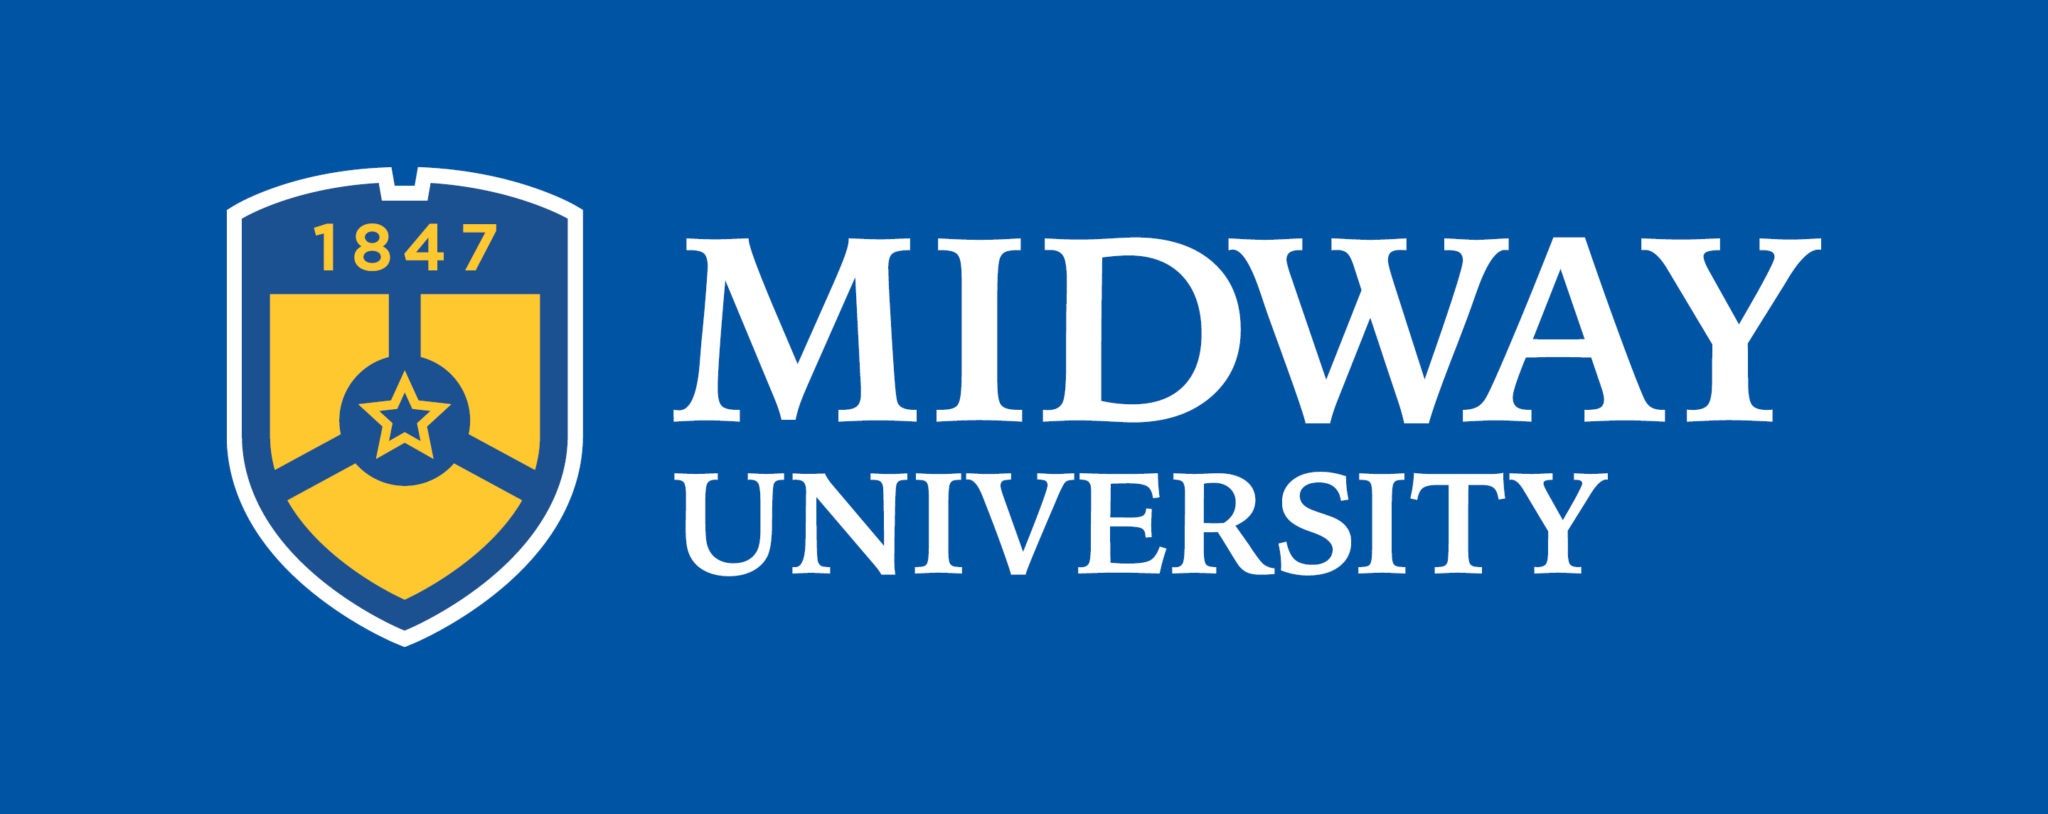 Midway University